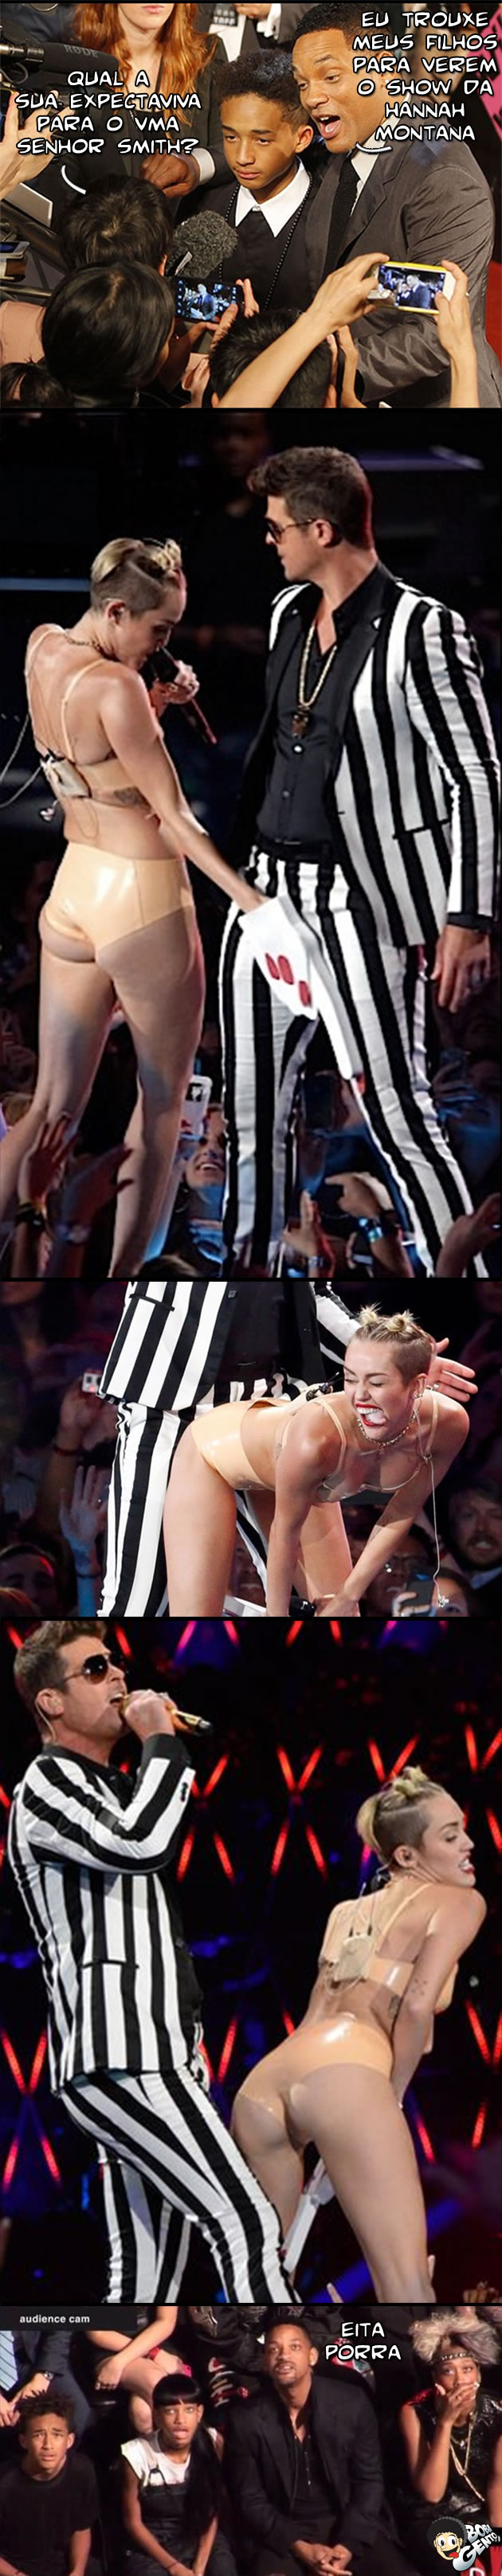 Hannah Montana barbarizando Miley Cyrus barbarizando no VMA